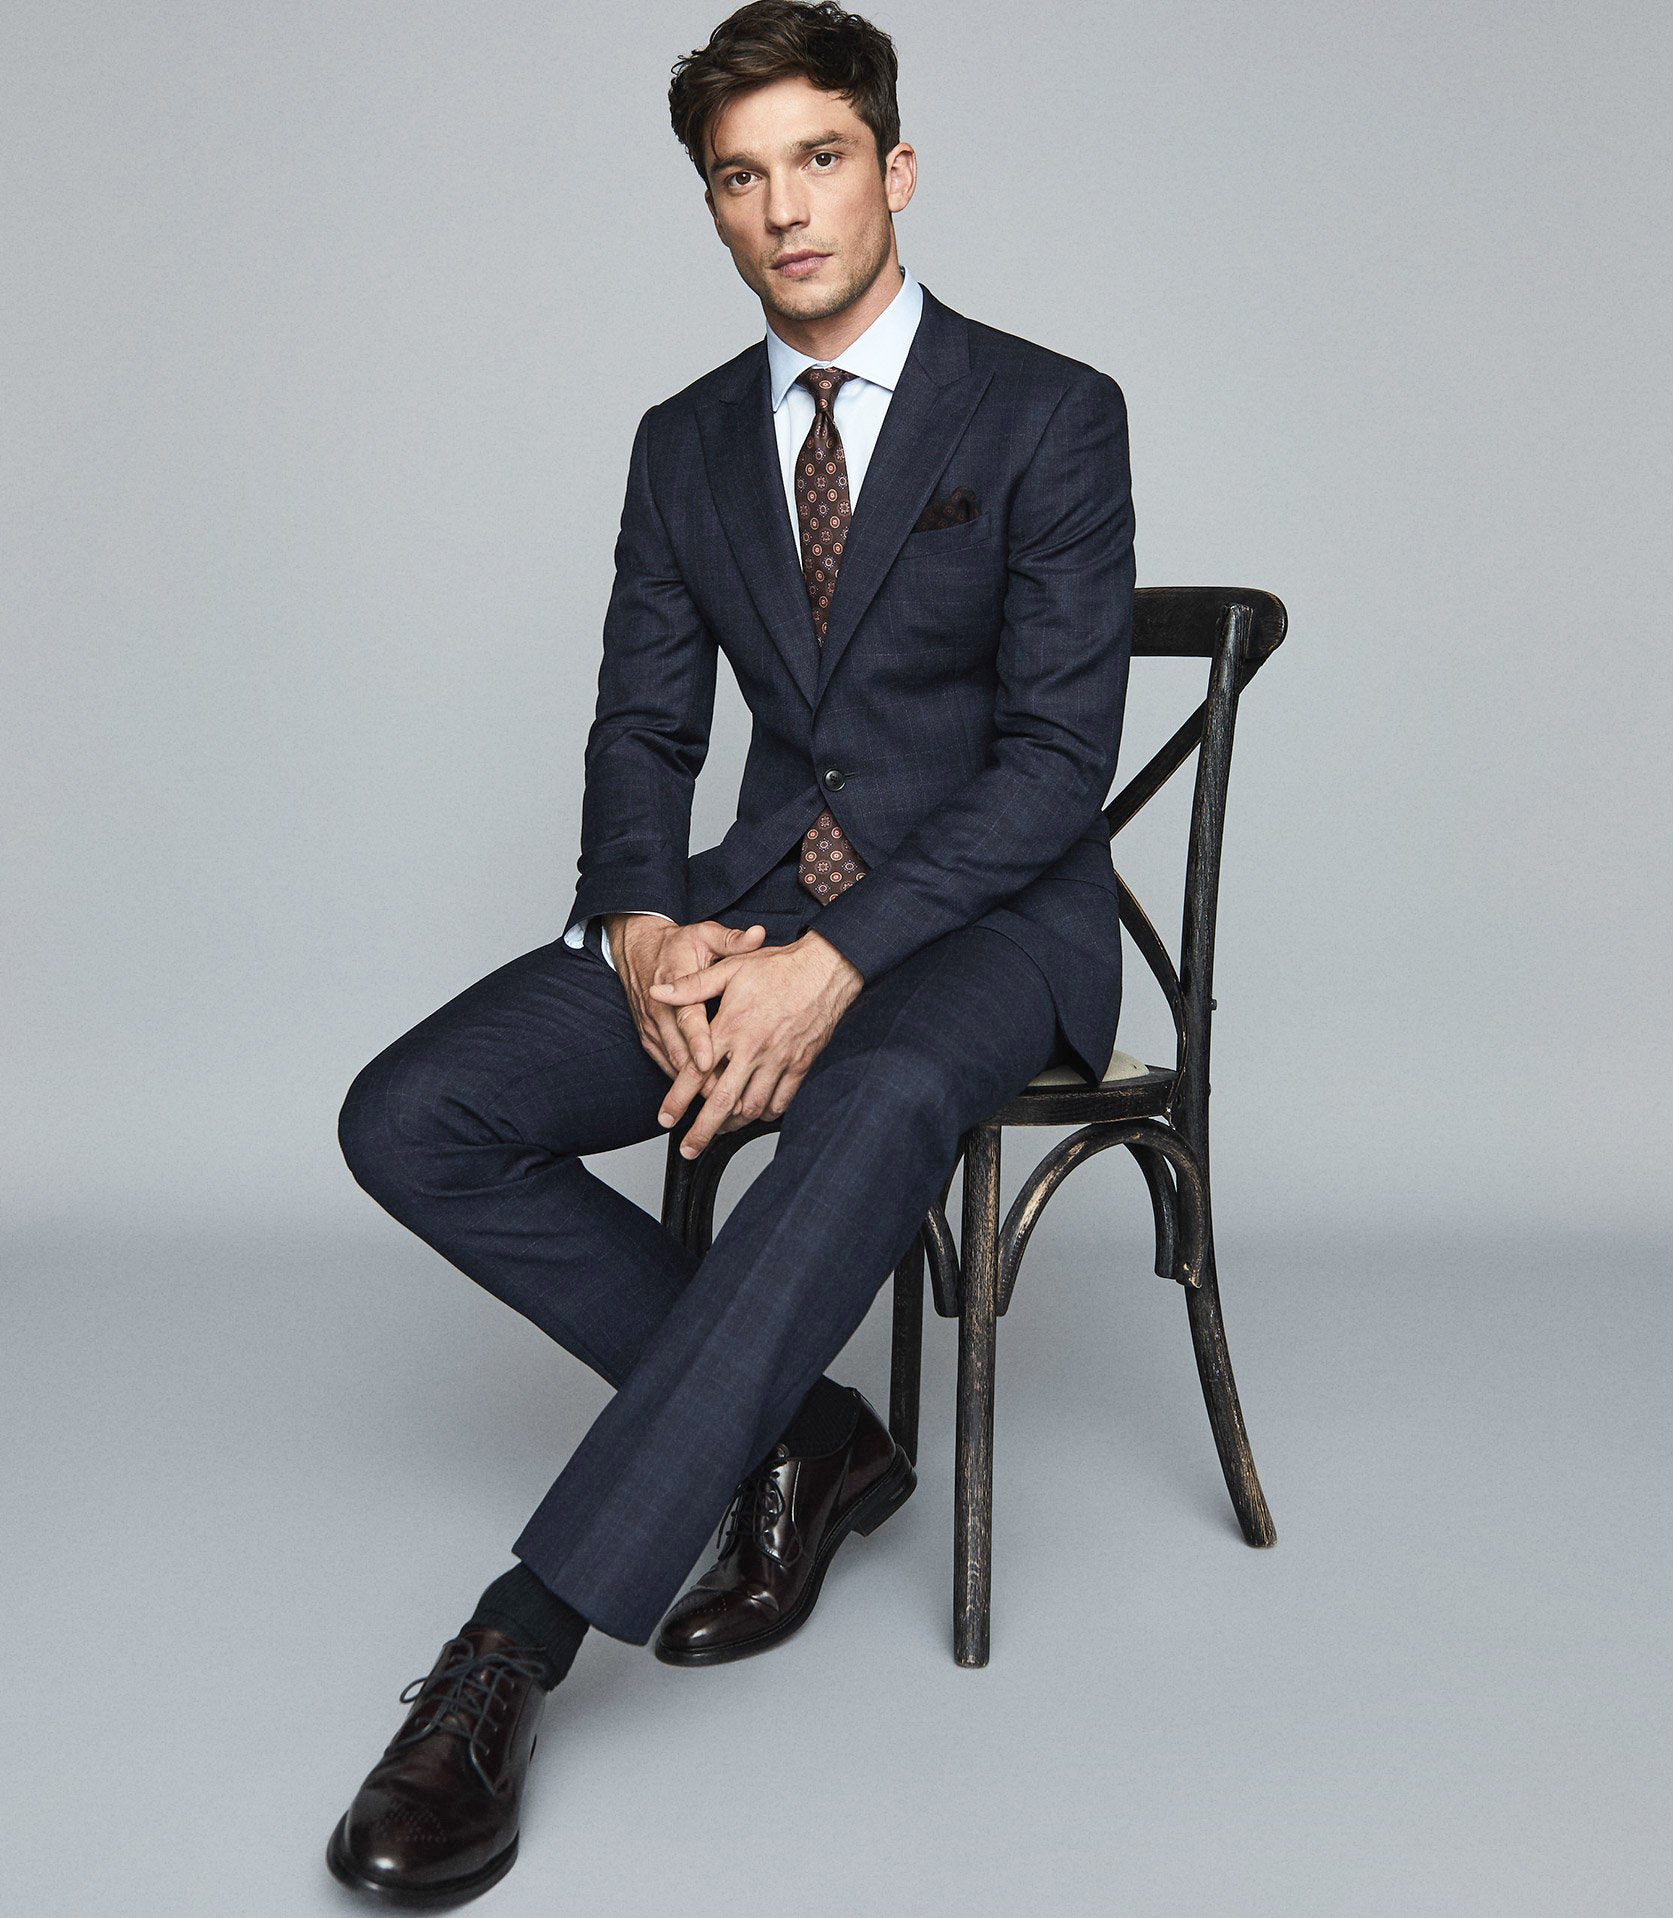 30 Best Suit Brands for Men - Suits Expert